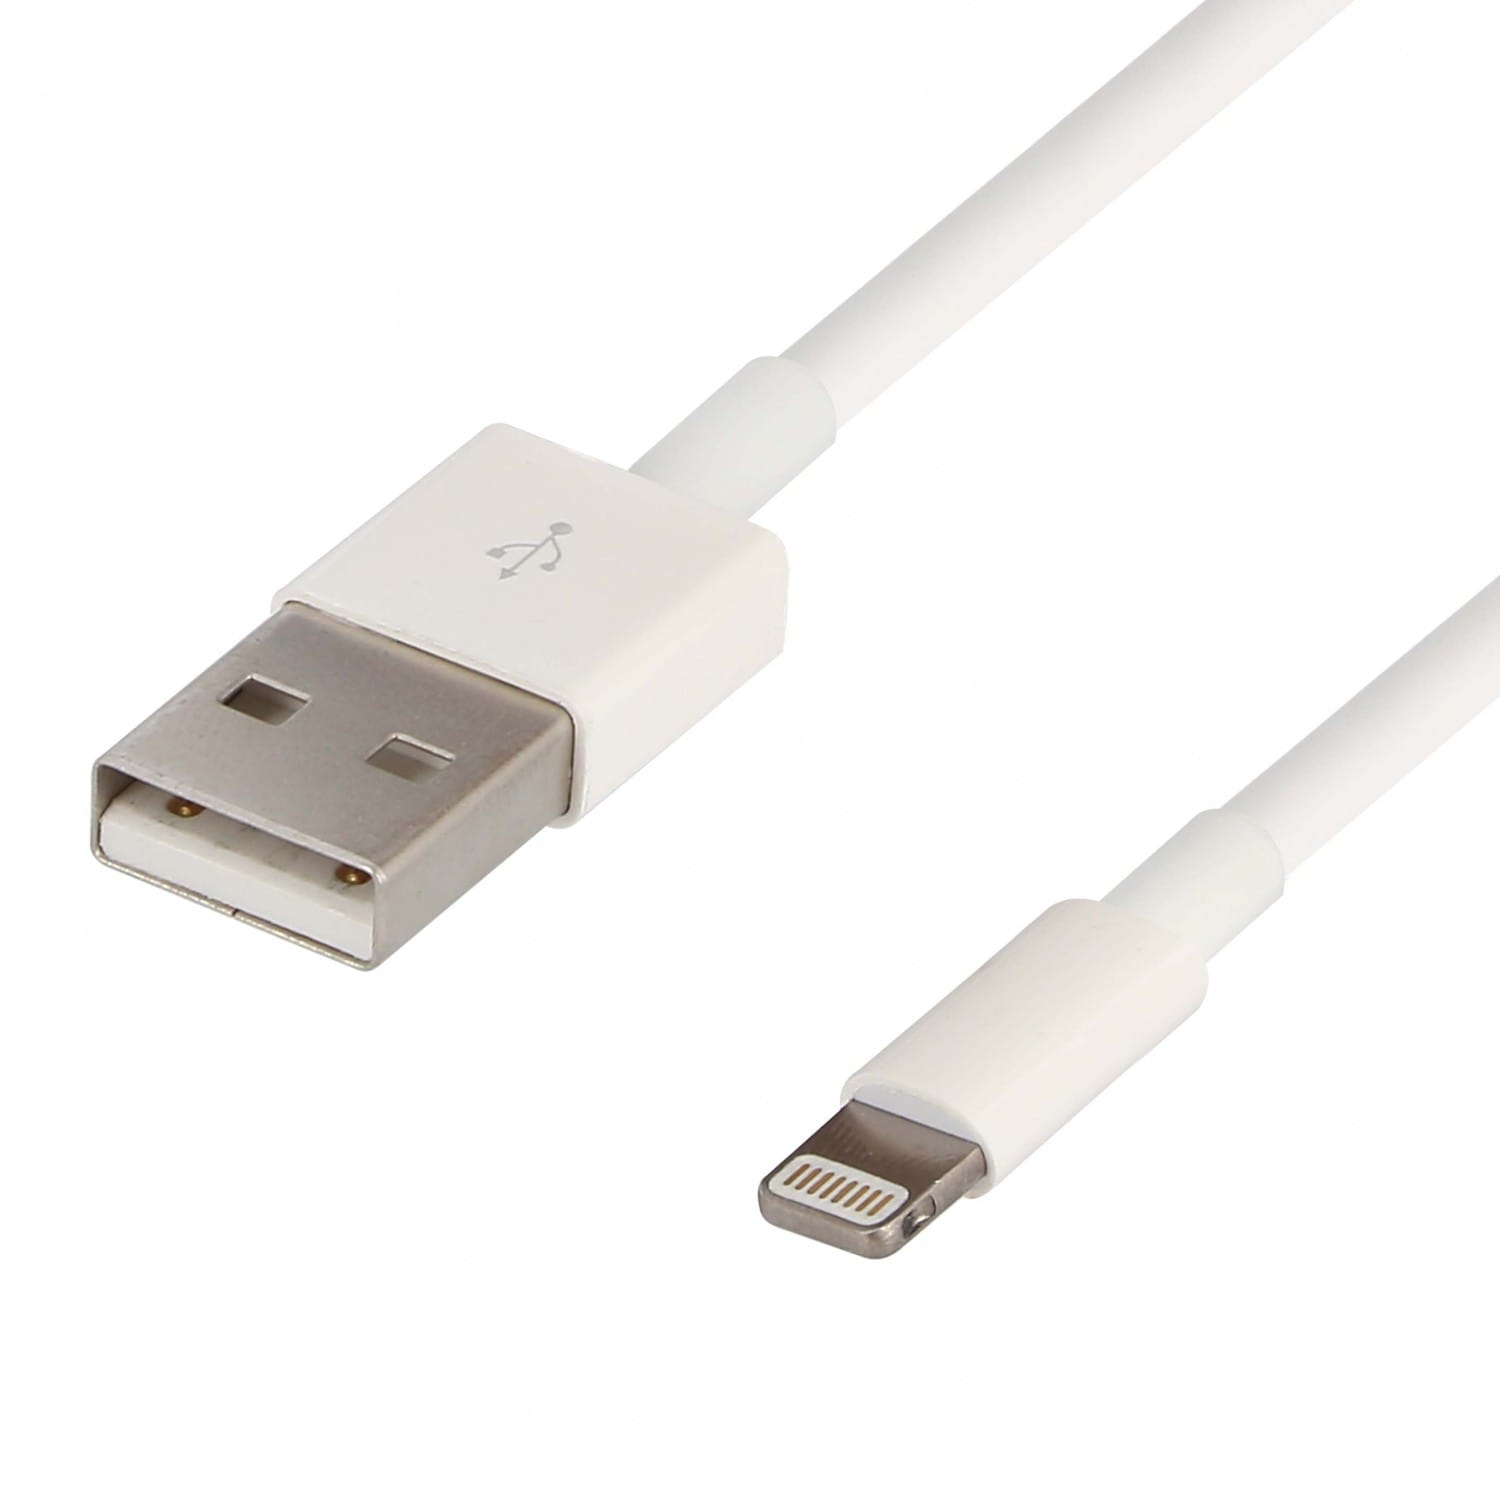 Câble GEEK MONKEY USB-A 2.1 compatible 3 en 1 - Micro USB/iPhone